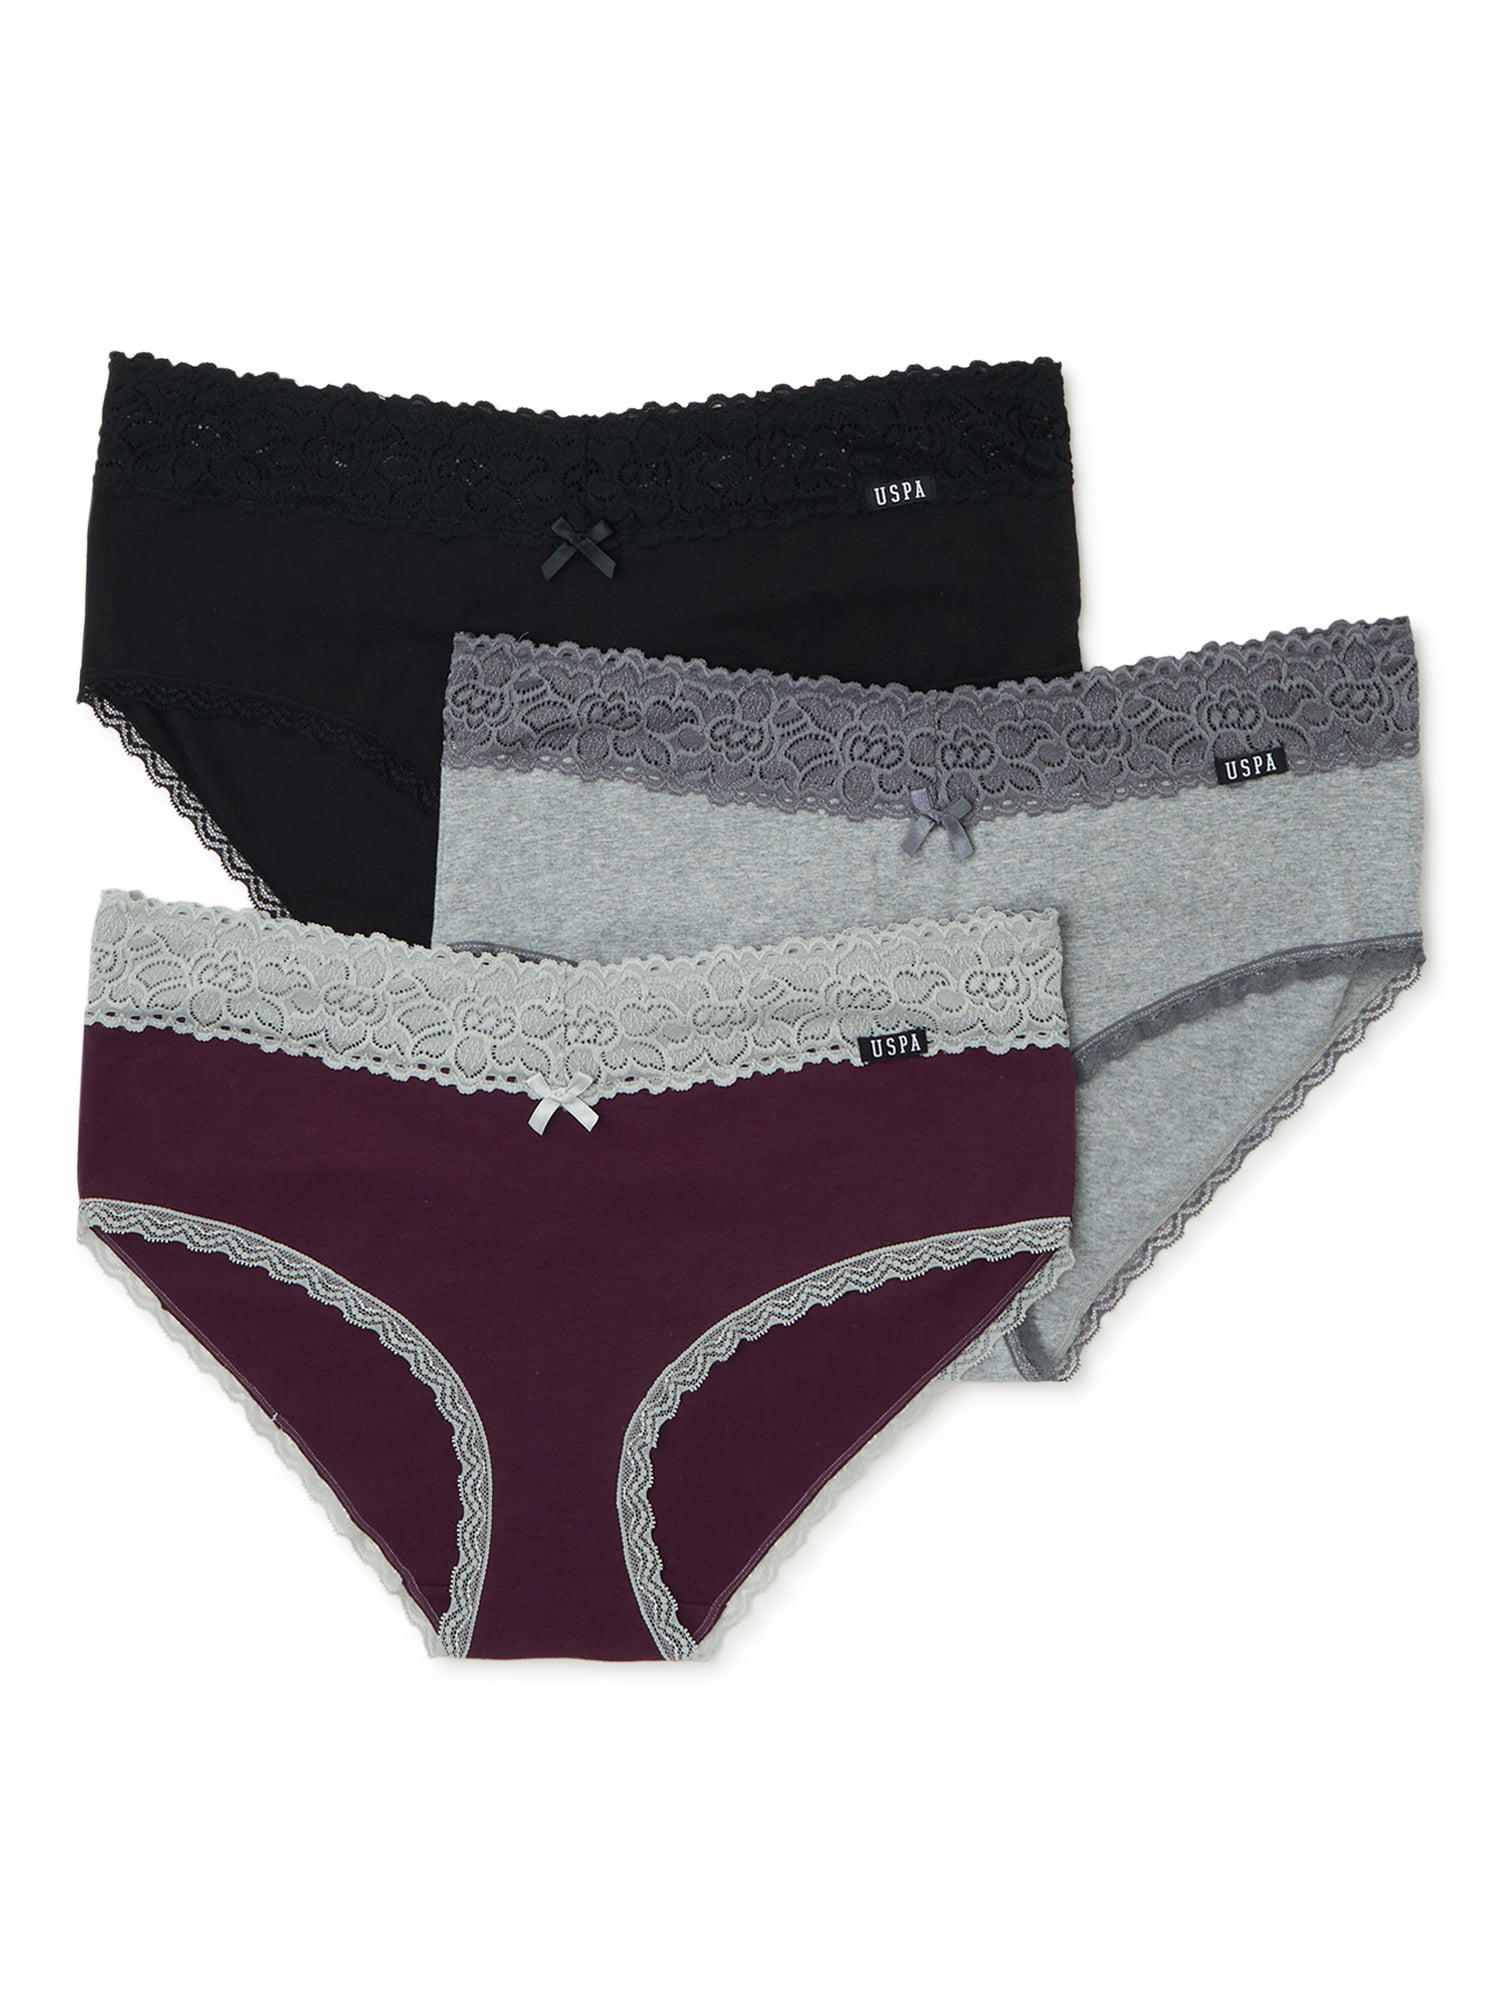 U.S Polo Assn Womens 3 Pack Seamless Wide Elastic Waist Thong Panties Charcoal Heather/Pink/Black Large